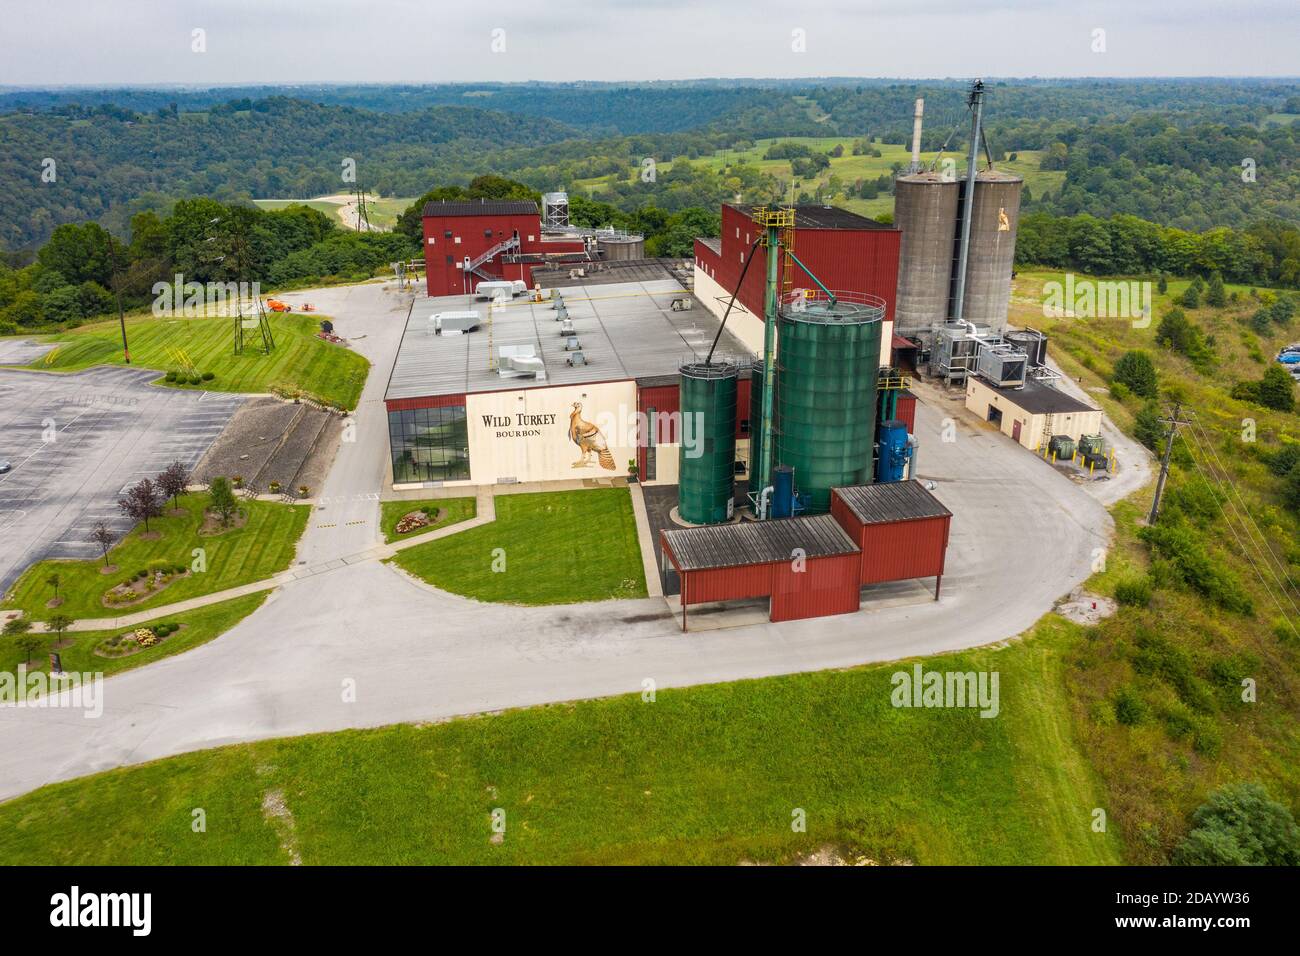 Wild Turkey Bourbon Distillery, Lawrenceburg, Kentucky, USA Stock Photo